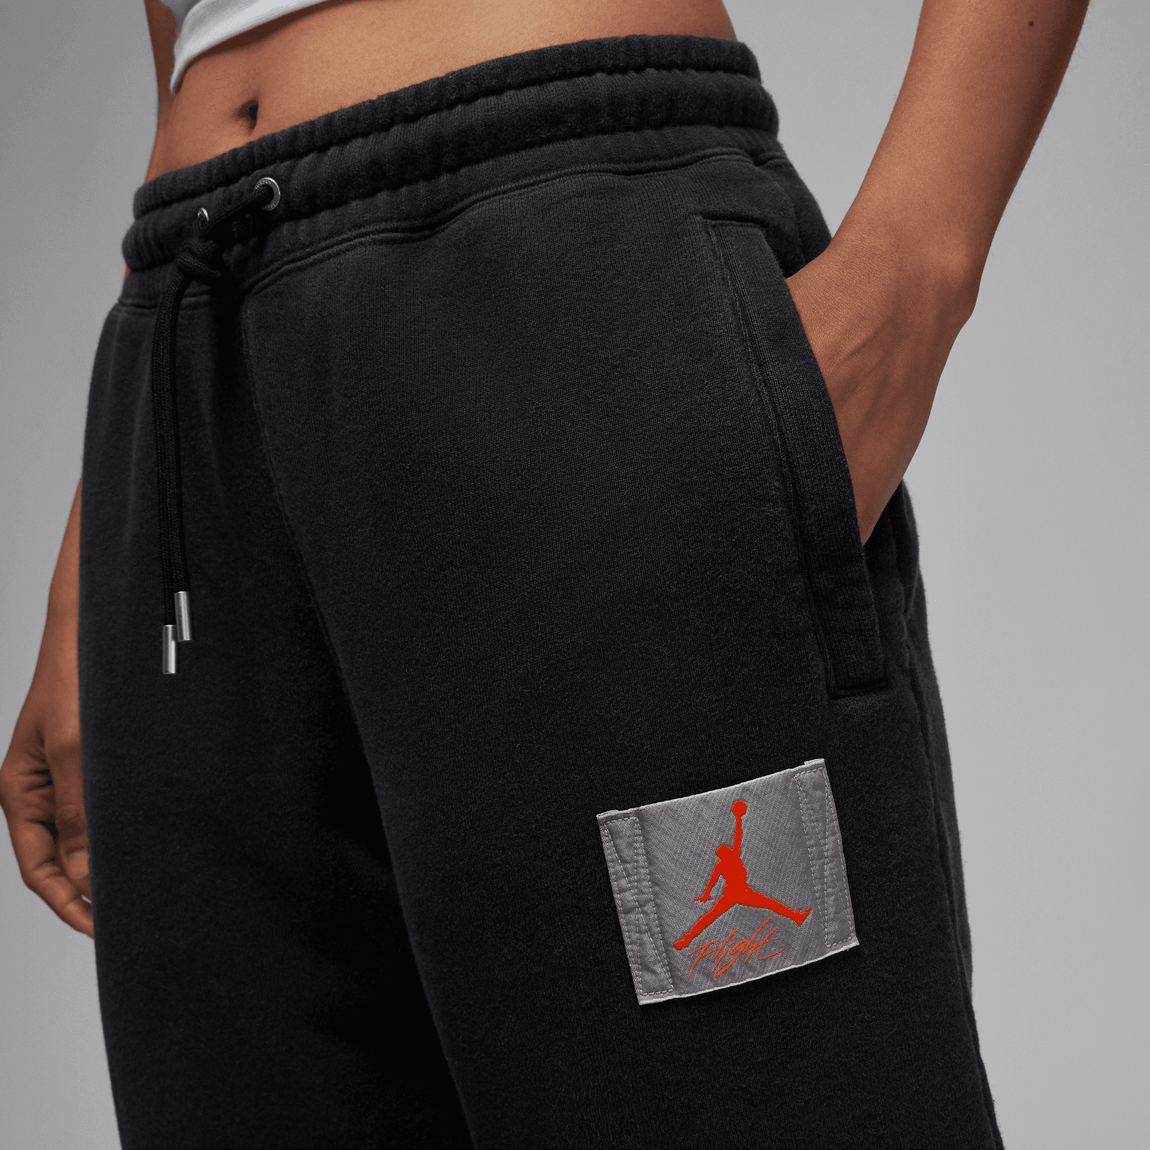 Air Jordan X Shelflife Women's Fleece Pants (Black/Total Orange) - Air Jordan X Shelflife Women's Fleece Pants (Black/Total Orange) - 